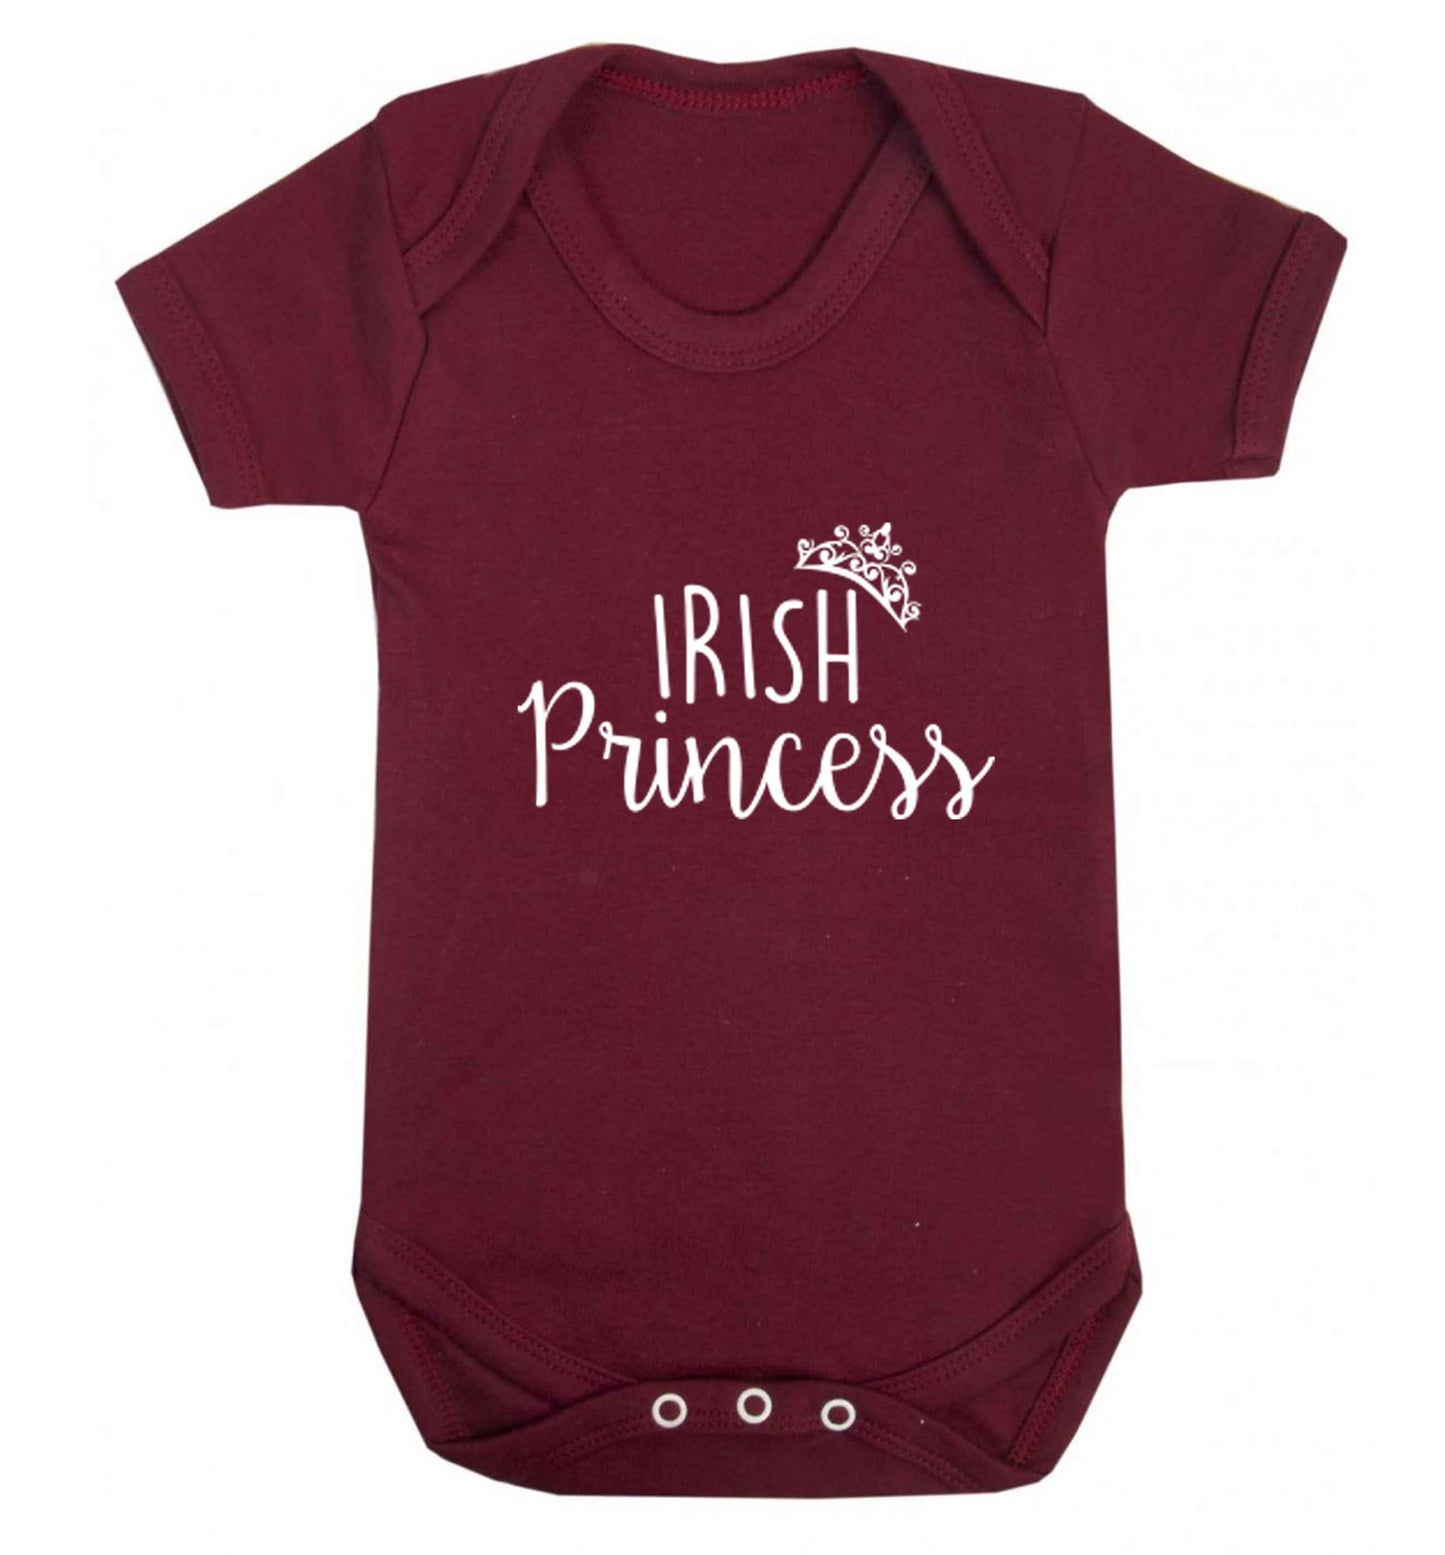 Irish princess baby vest maroon 18-24 months